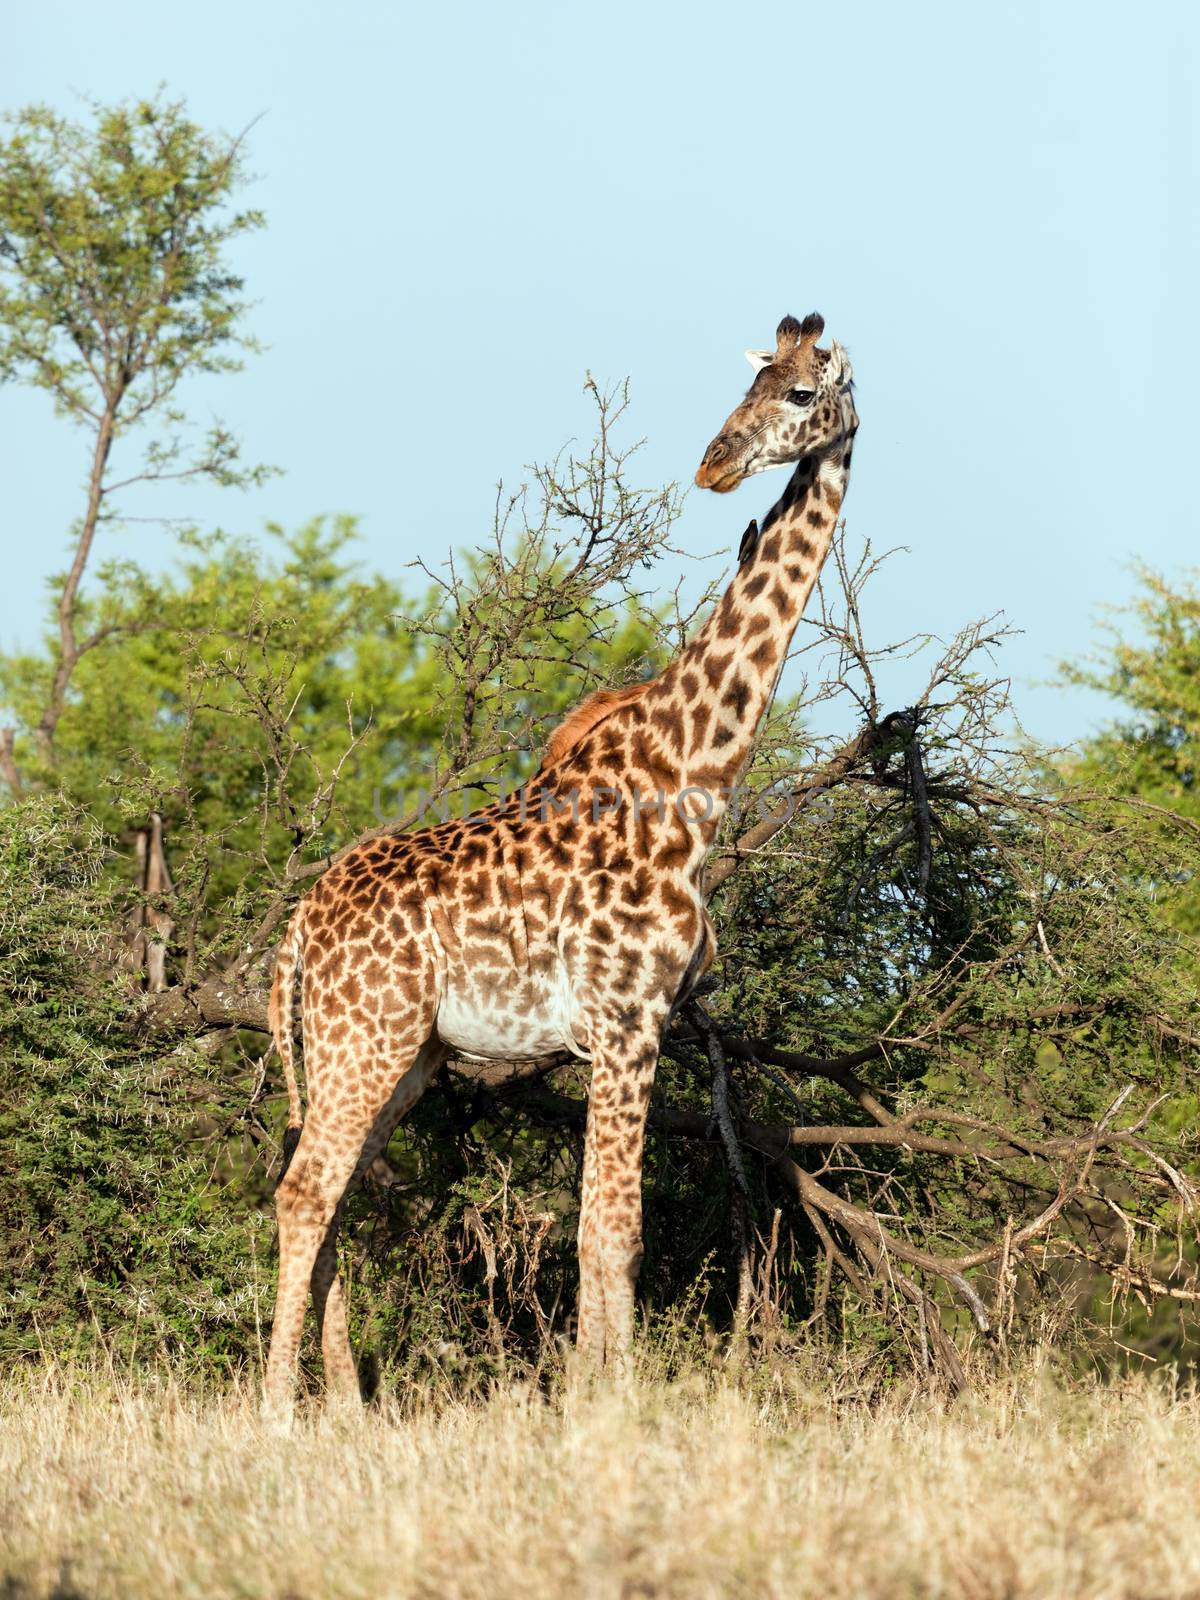 Giraffe on savanna. Safari in Serengeti, Tanzania, Africa by photocreo